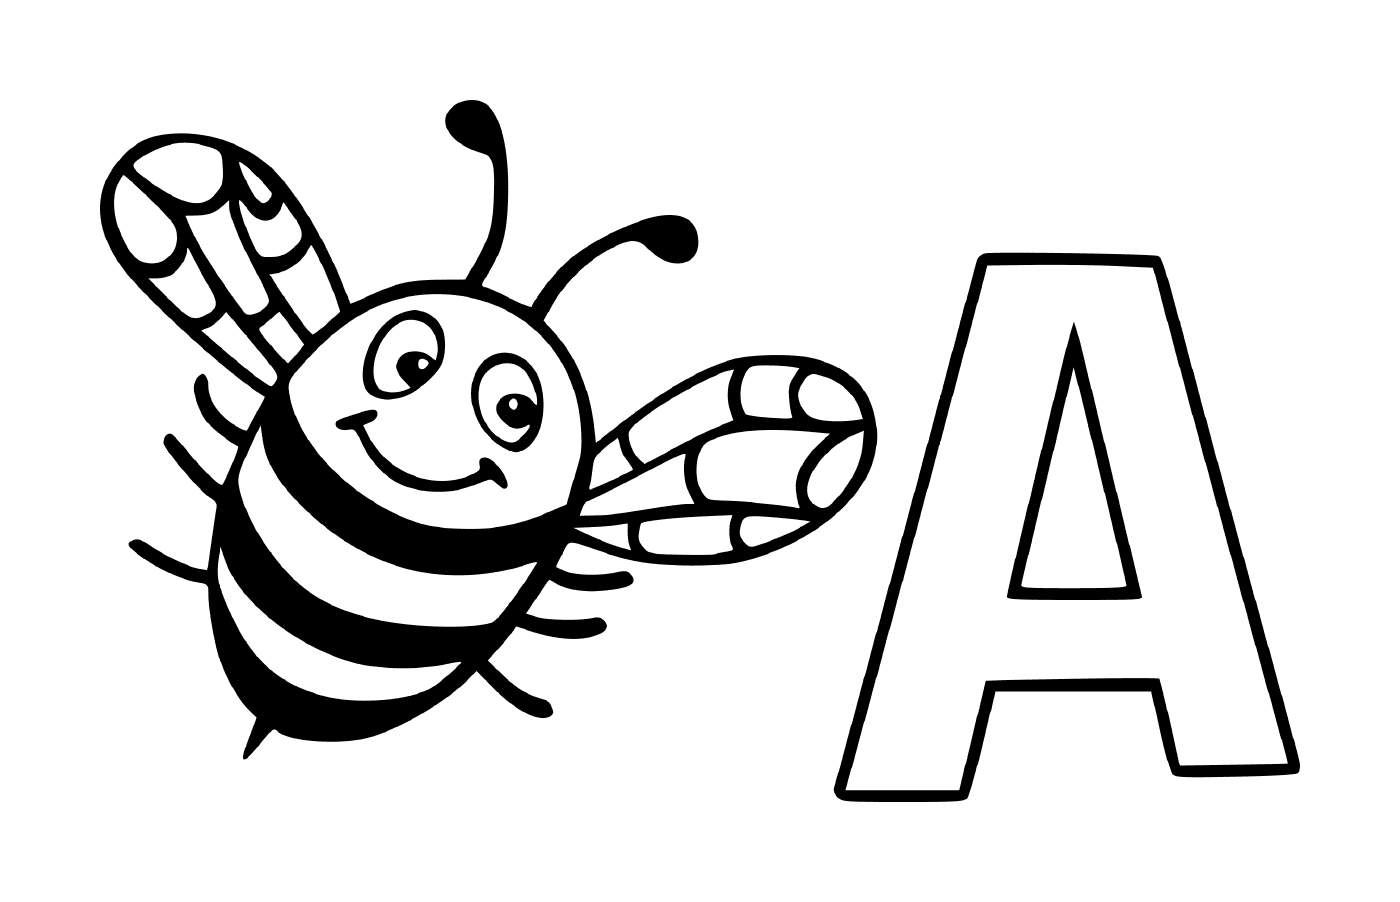  Carta A con una abeja 